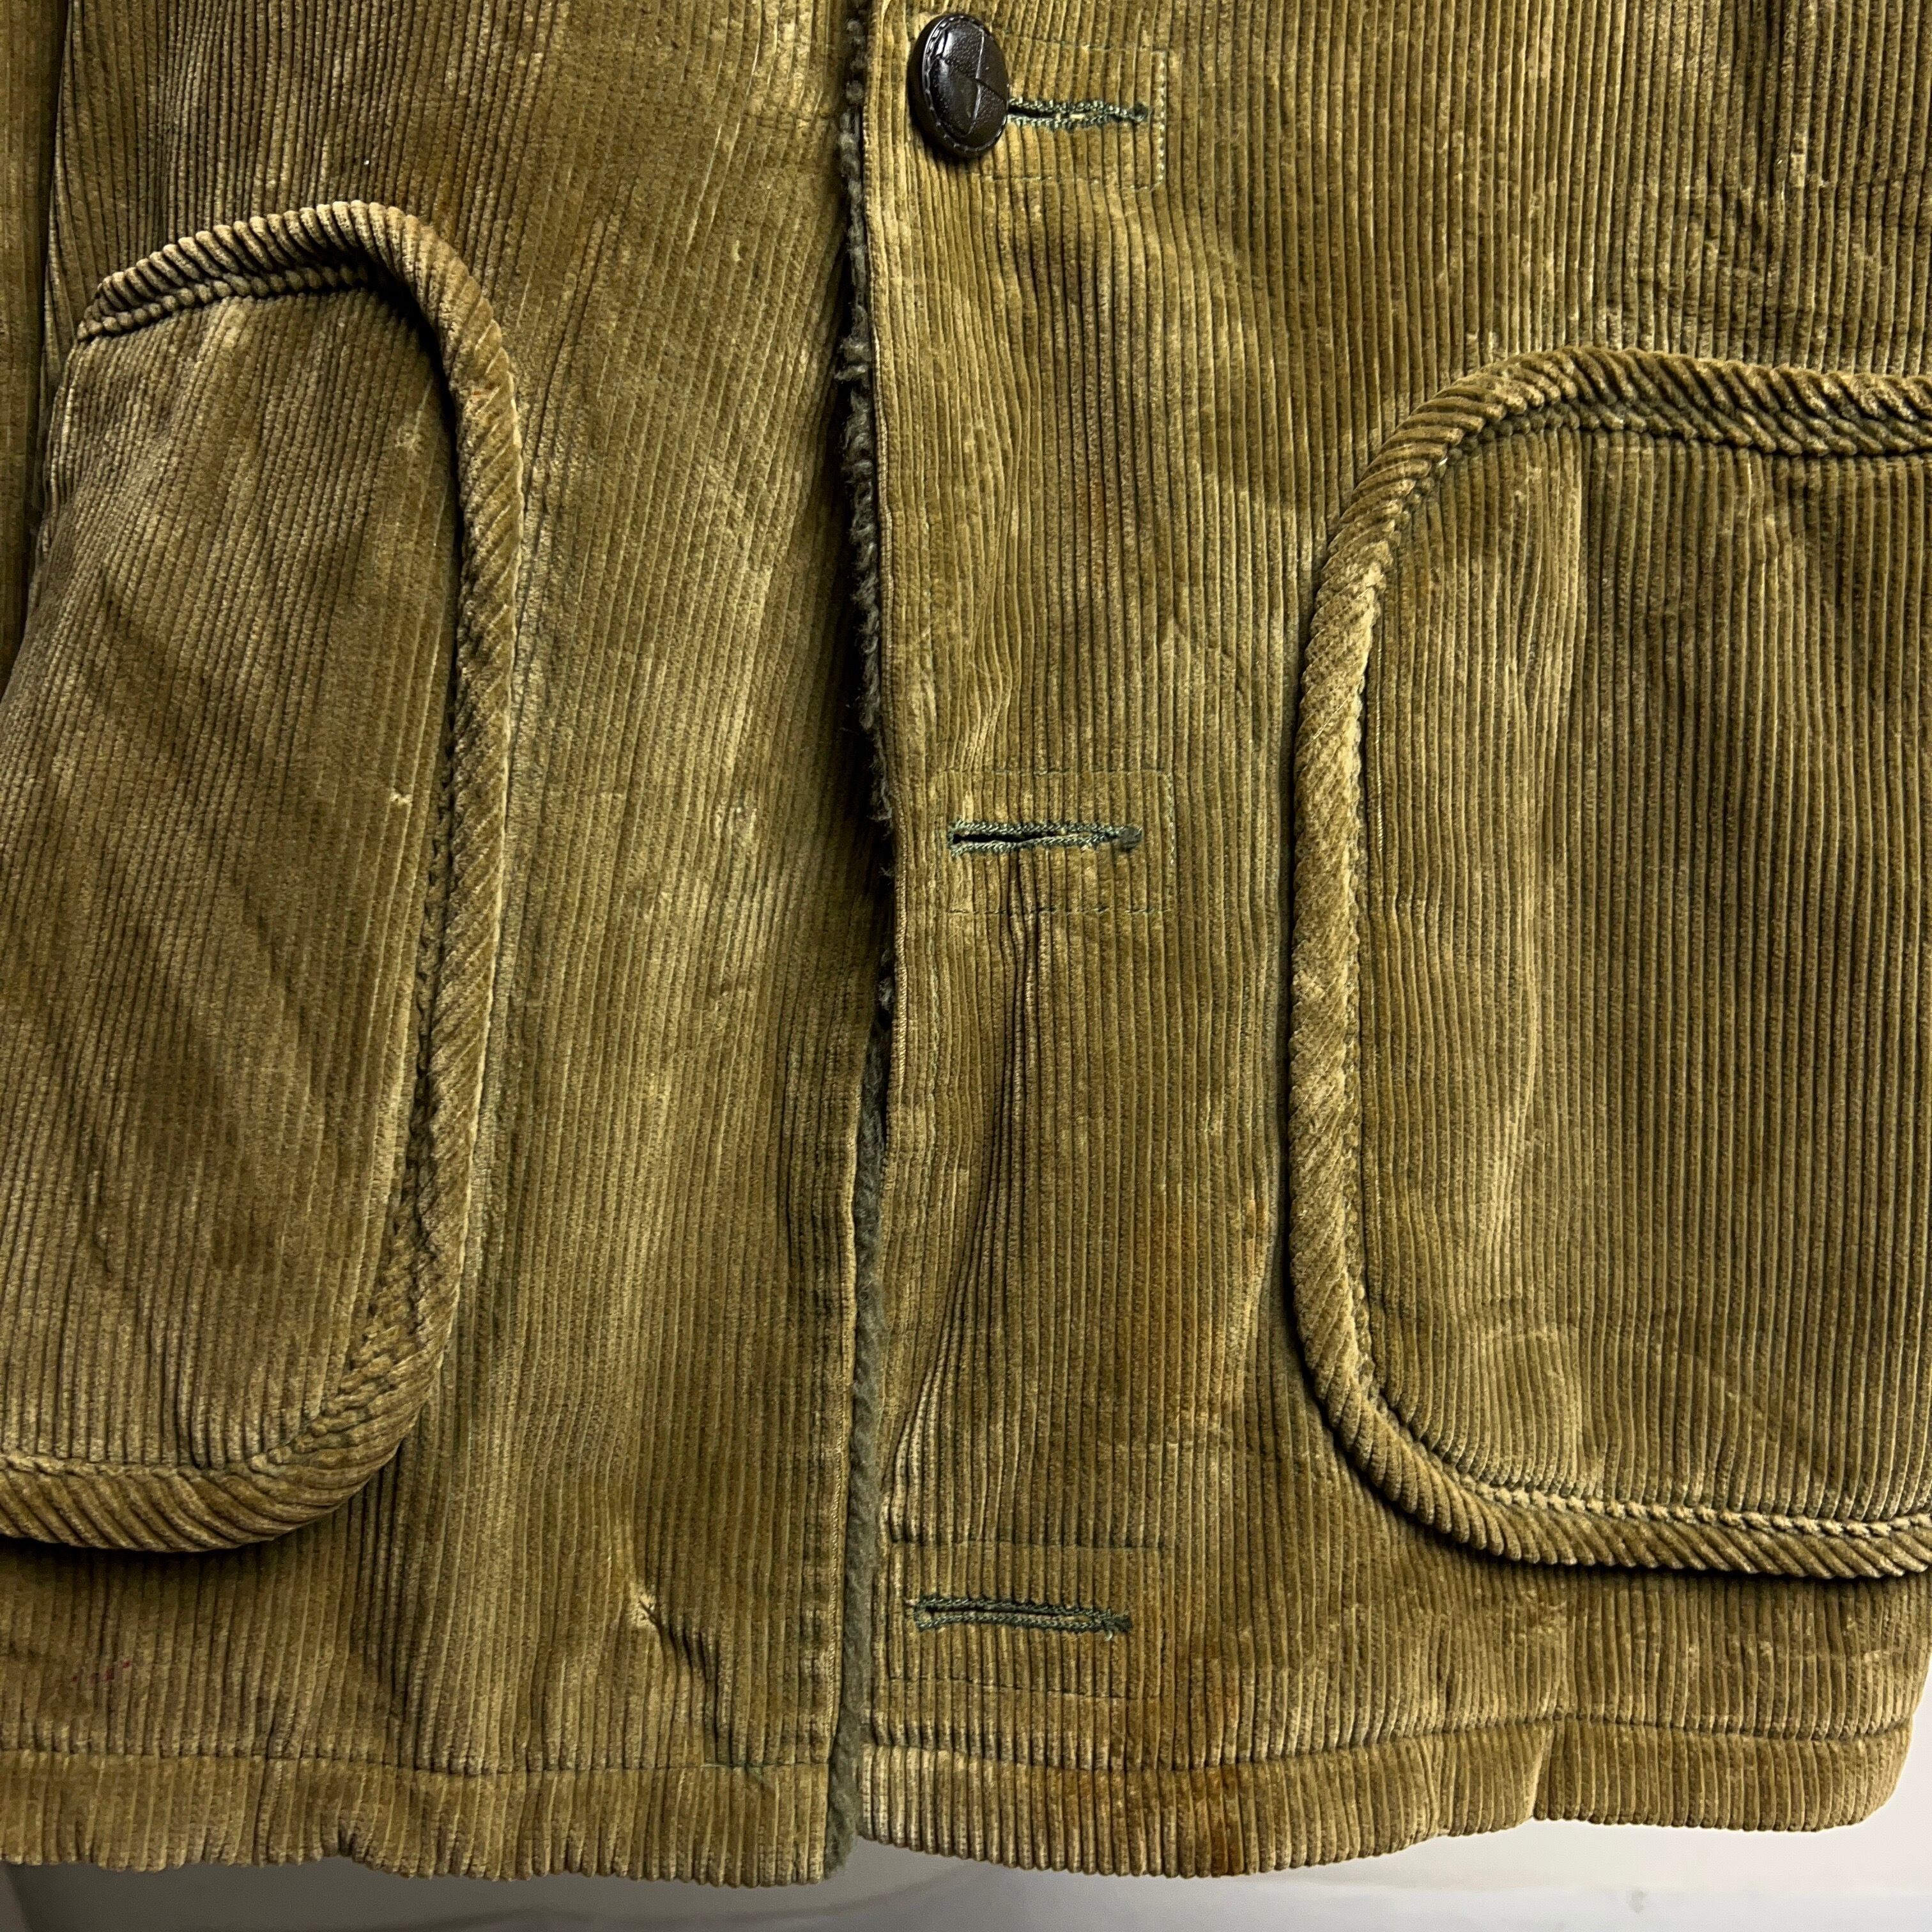 希少 60s' 2nd type corduroy tracker jacket